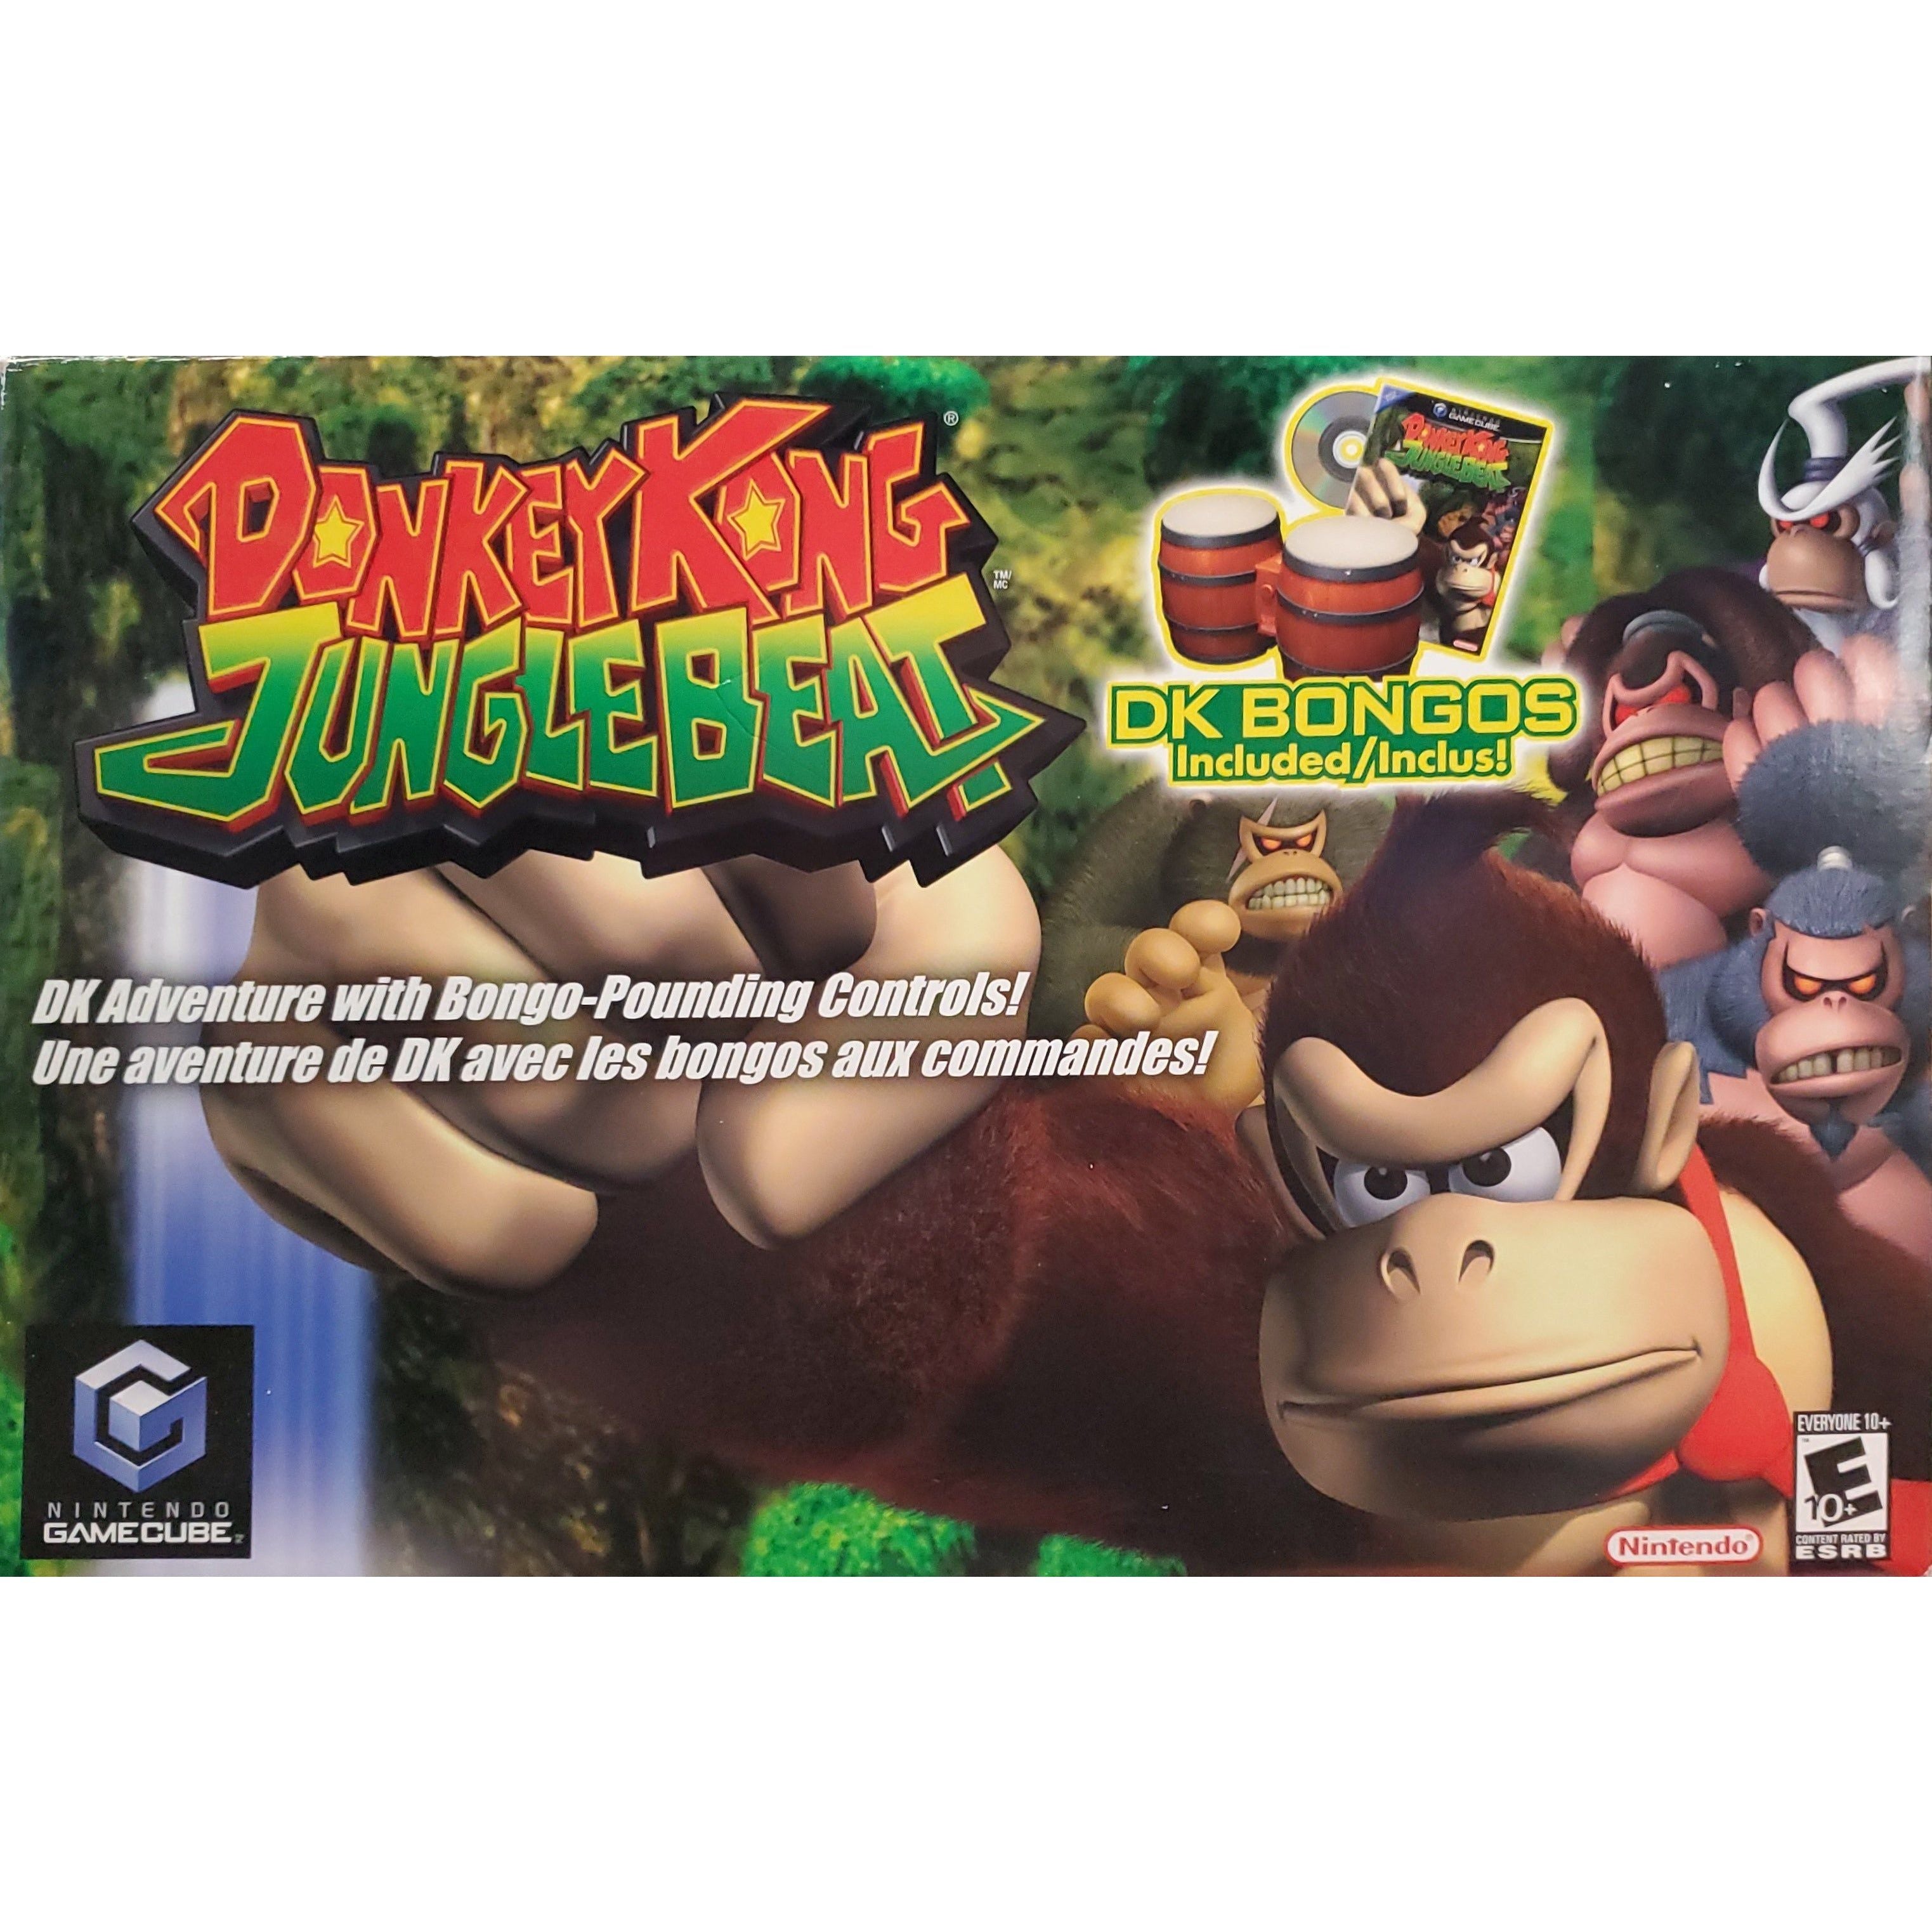 GameCube - Donkey Kong Jungle Beat DK Bongos (No Game)